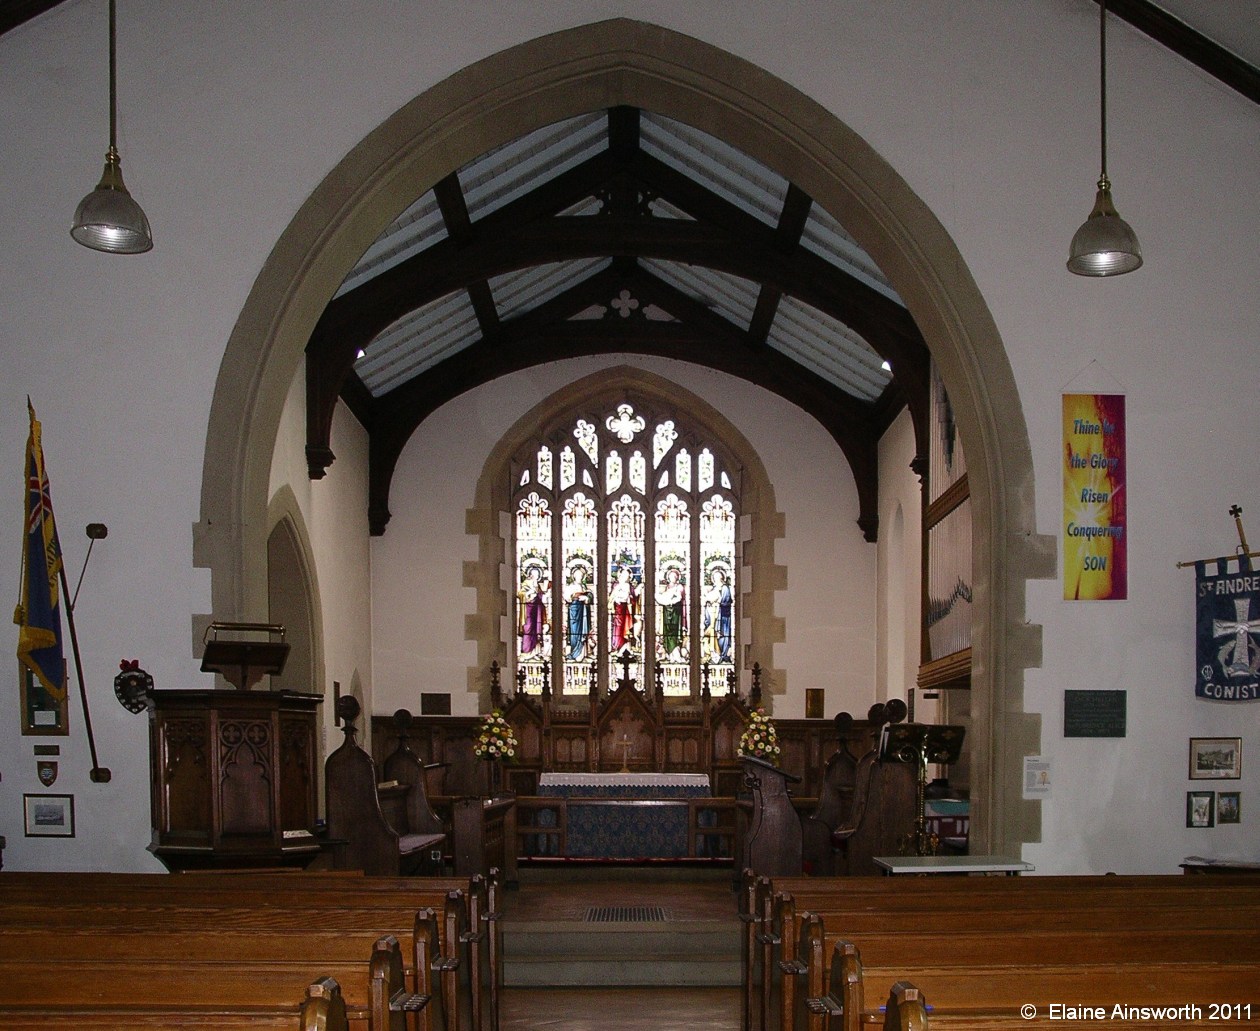 The Church Interior